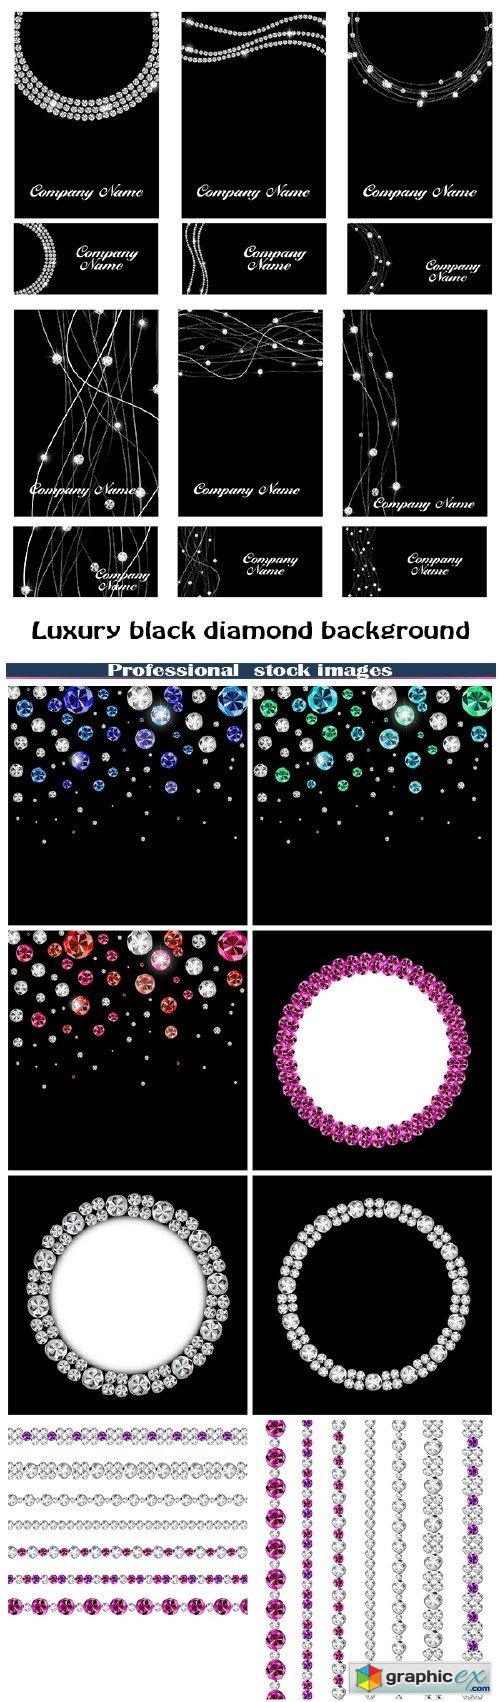 Abstract luxury black diamond background